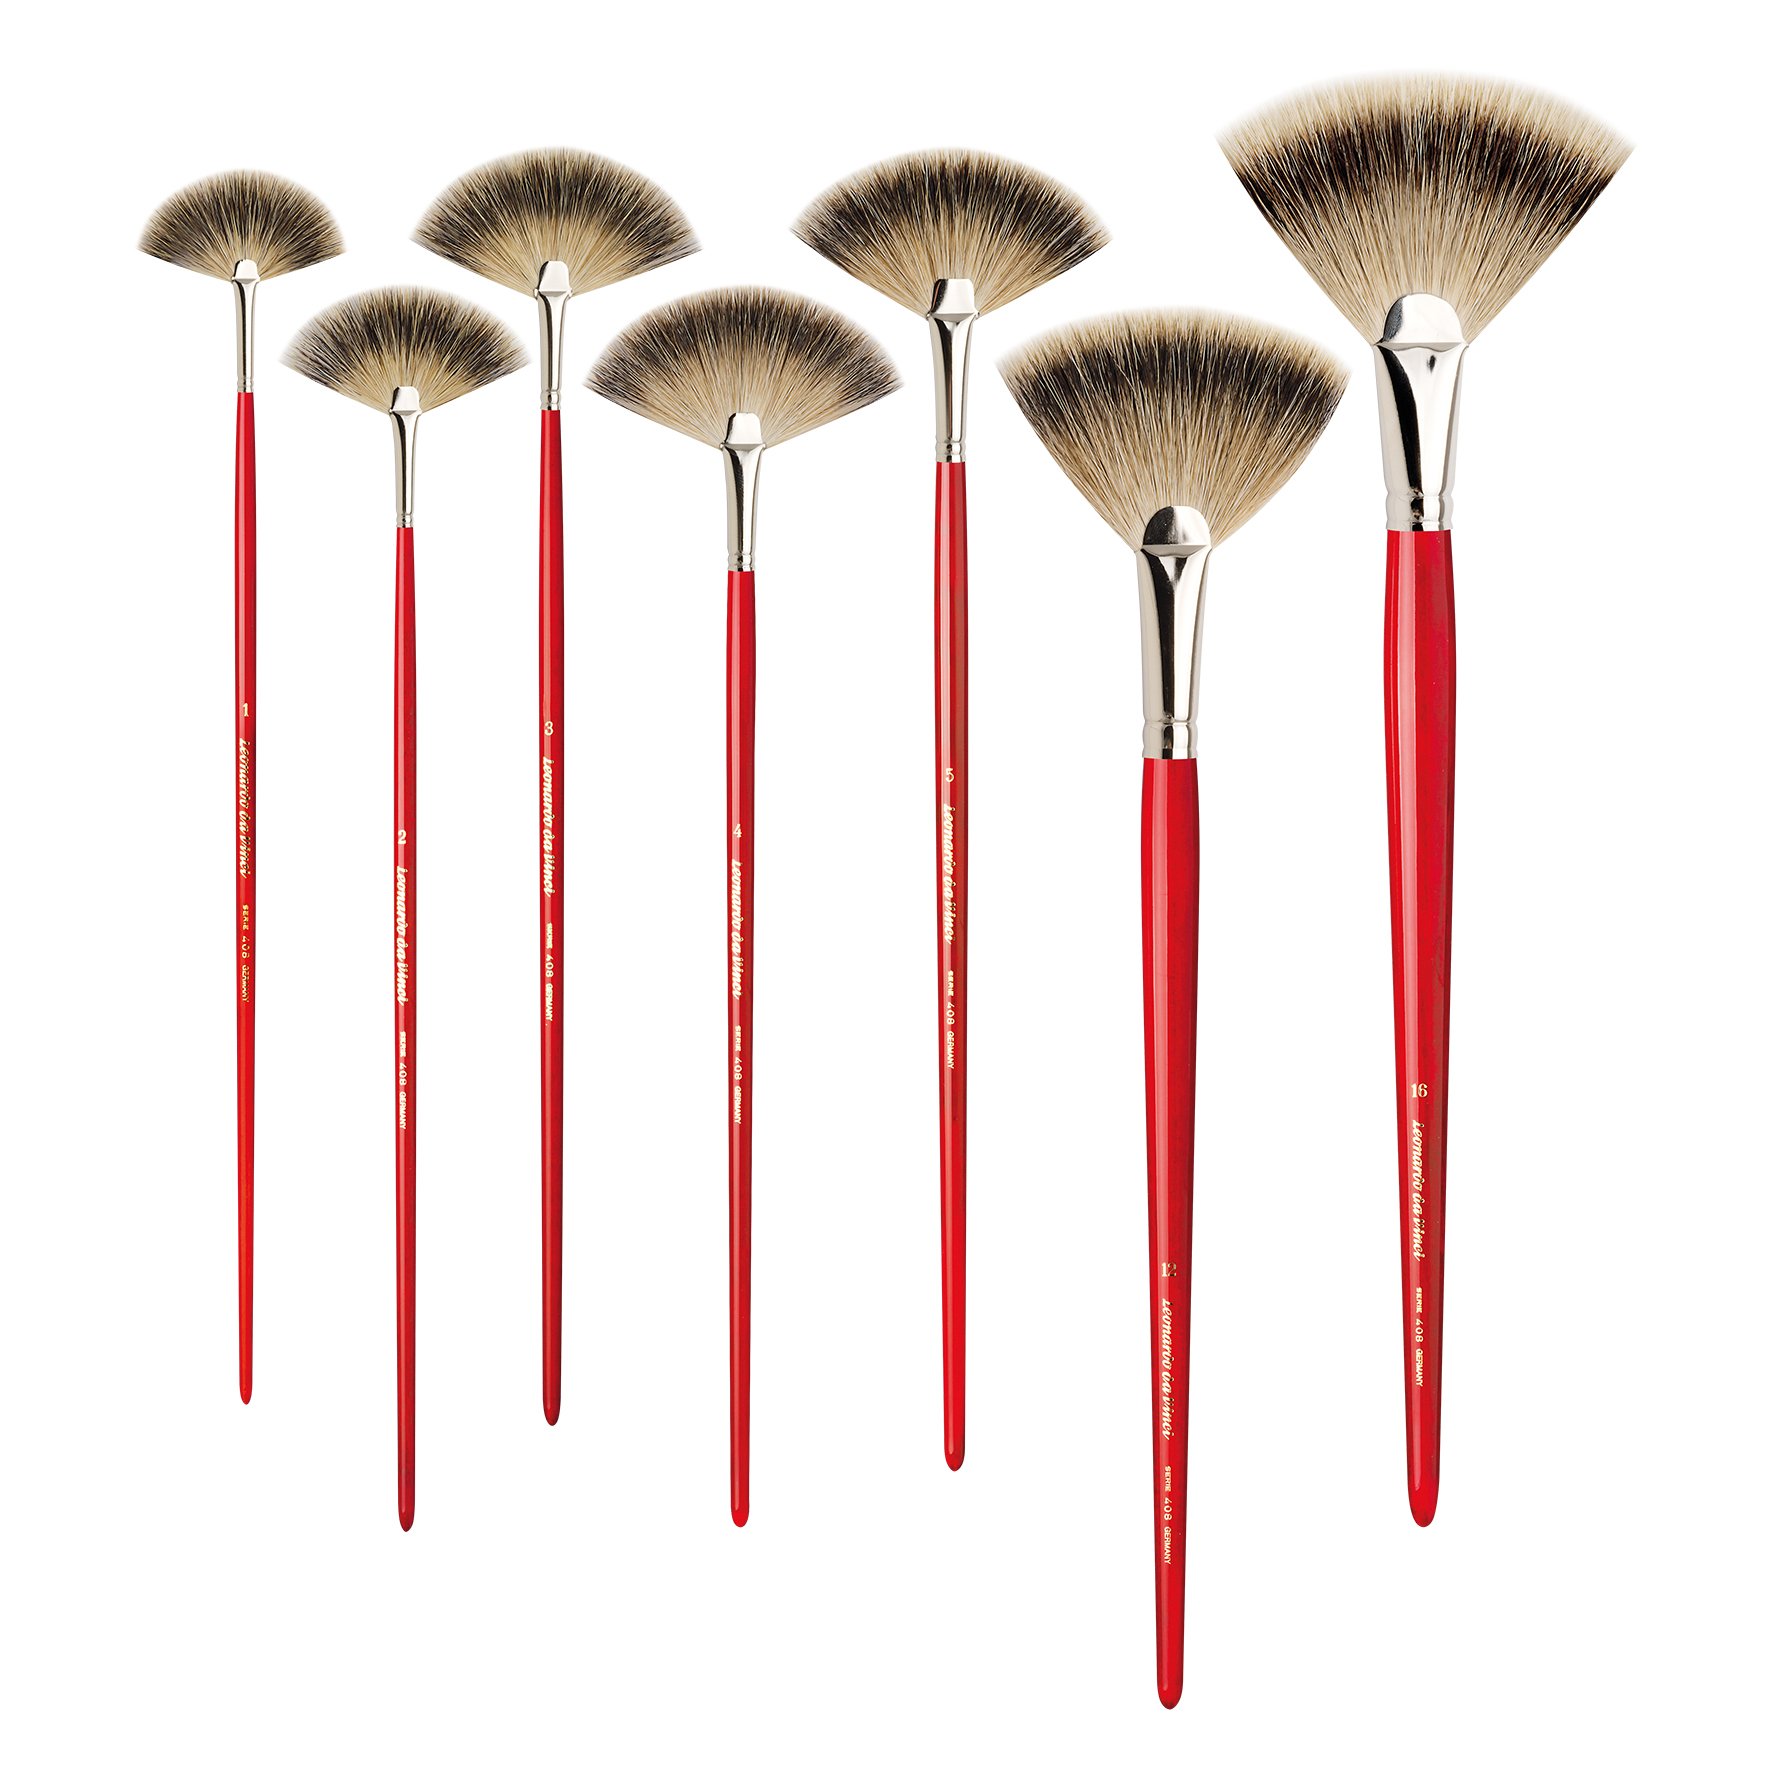 DaVinci Badger Fan Brushes Series 40 - Size 1